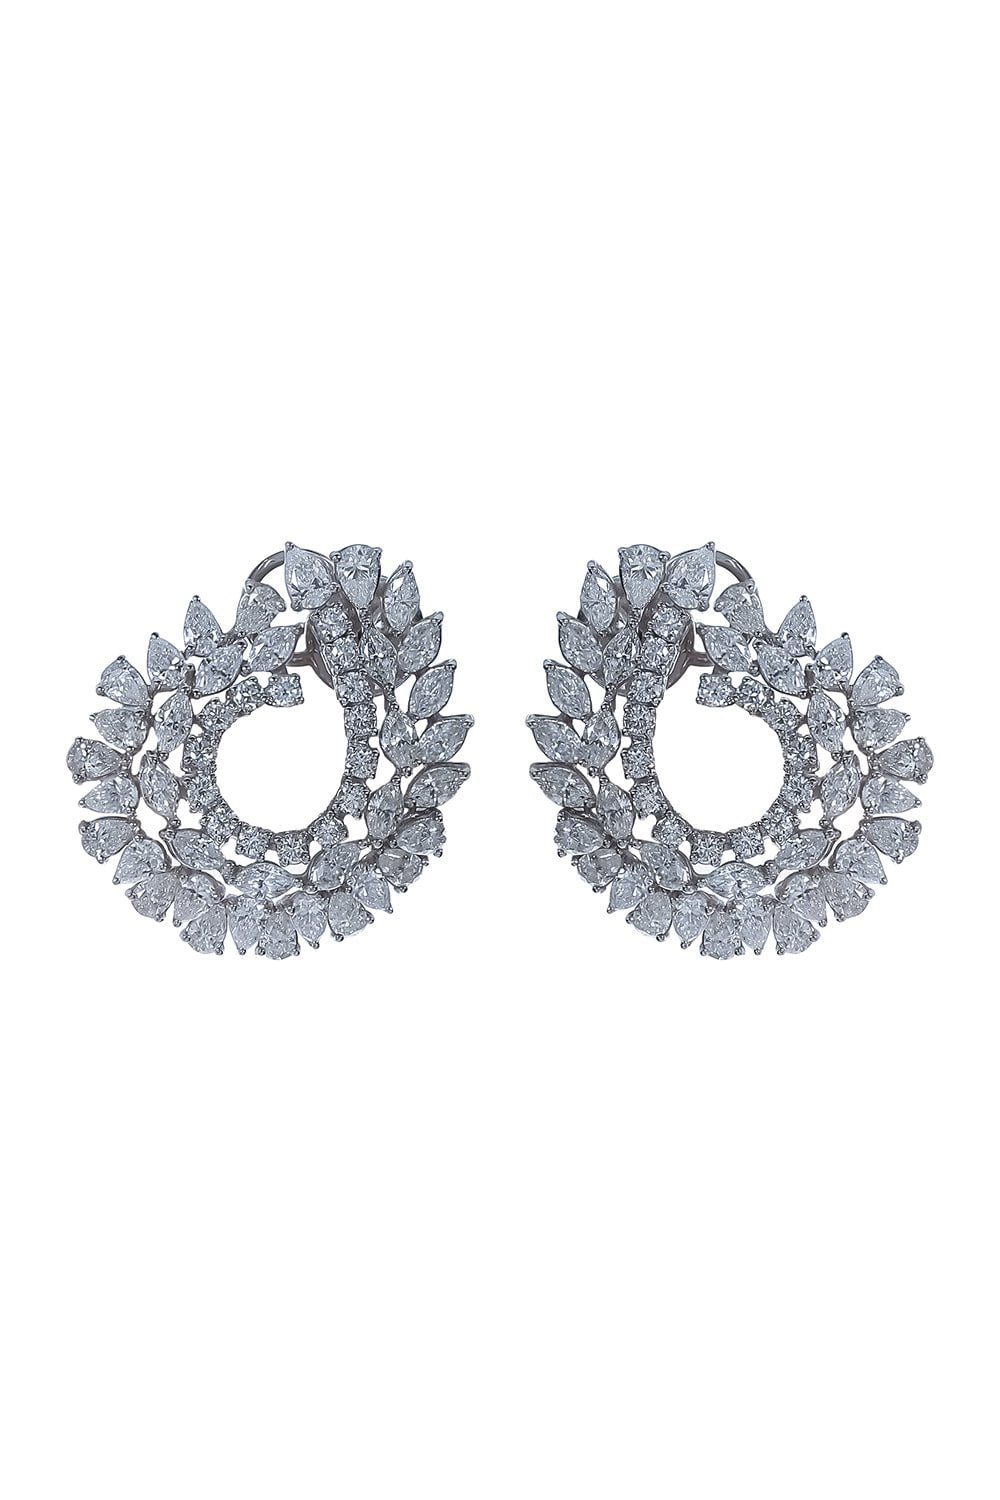 RUCHI-Mixed Diamond Earrings-WHITE GOLD